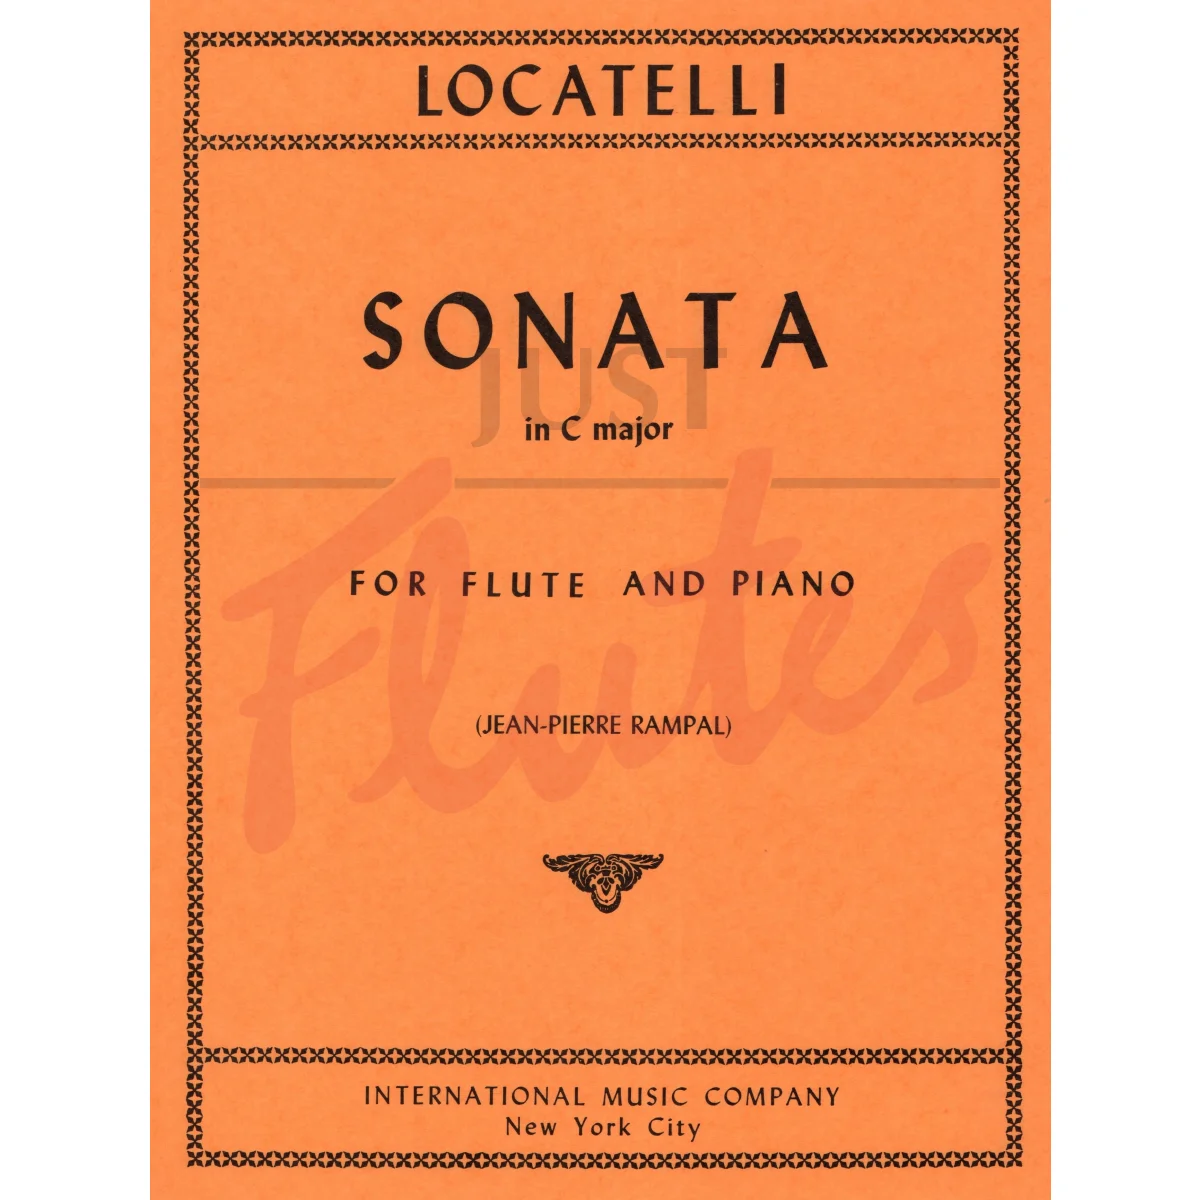 Sonata No. 2 in C major for Flute and Piano